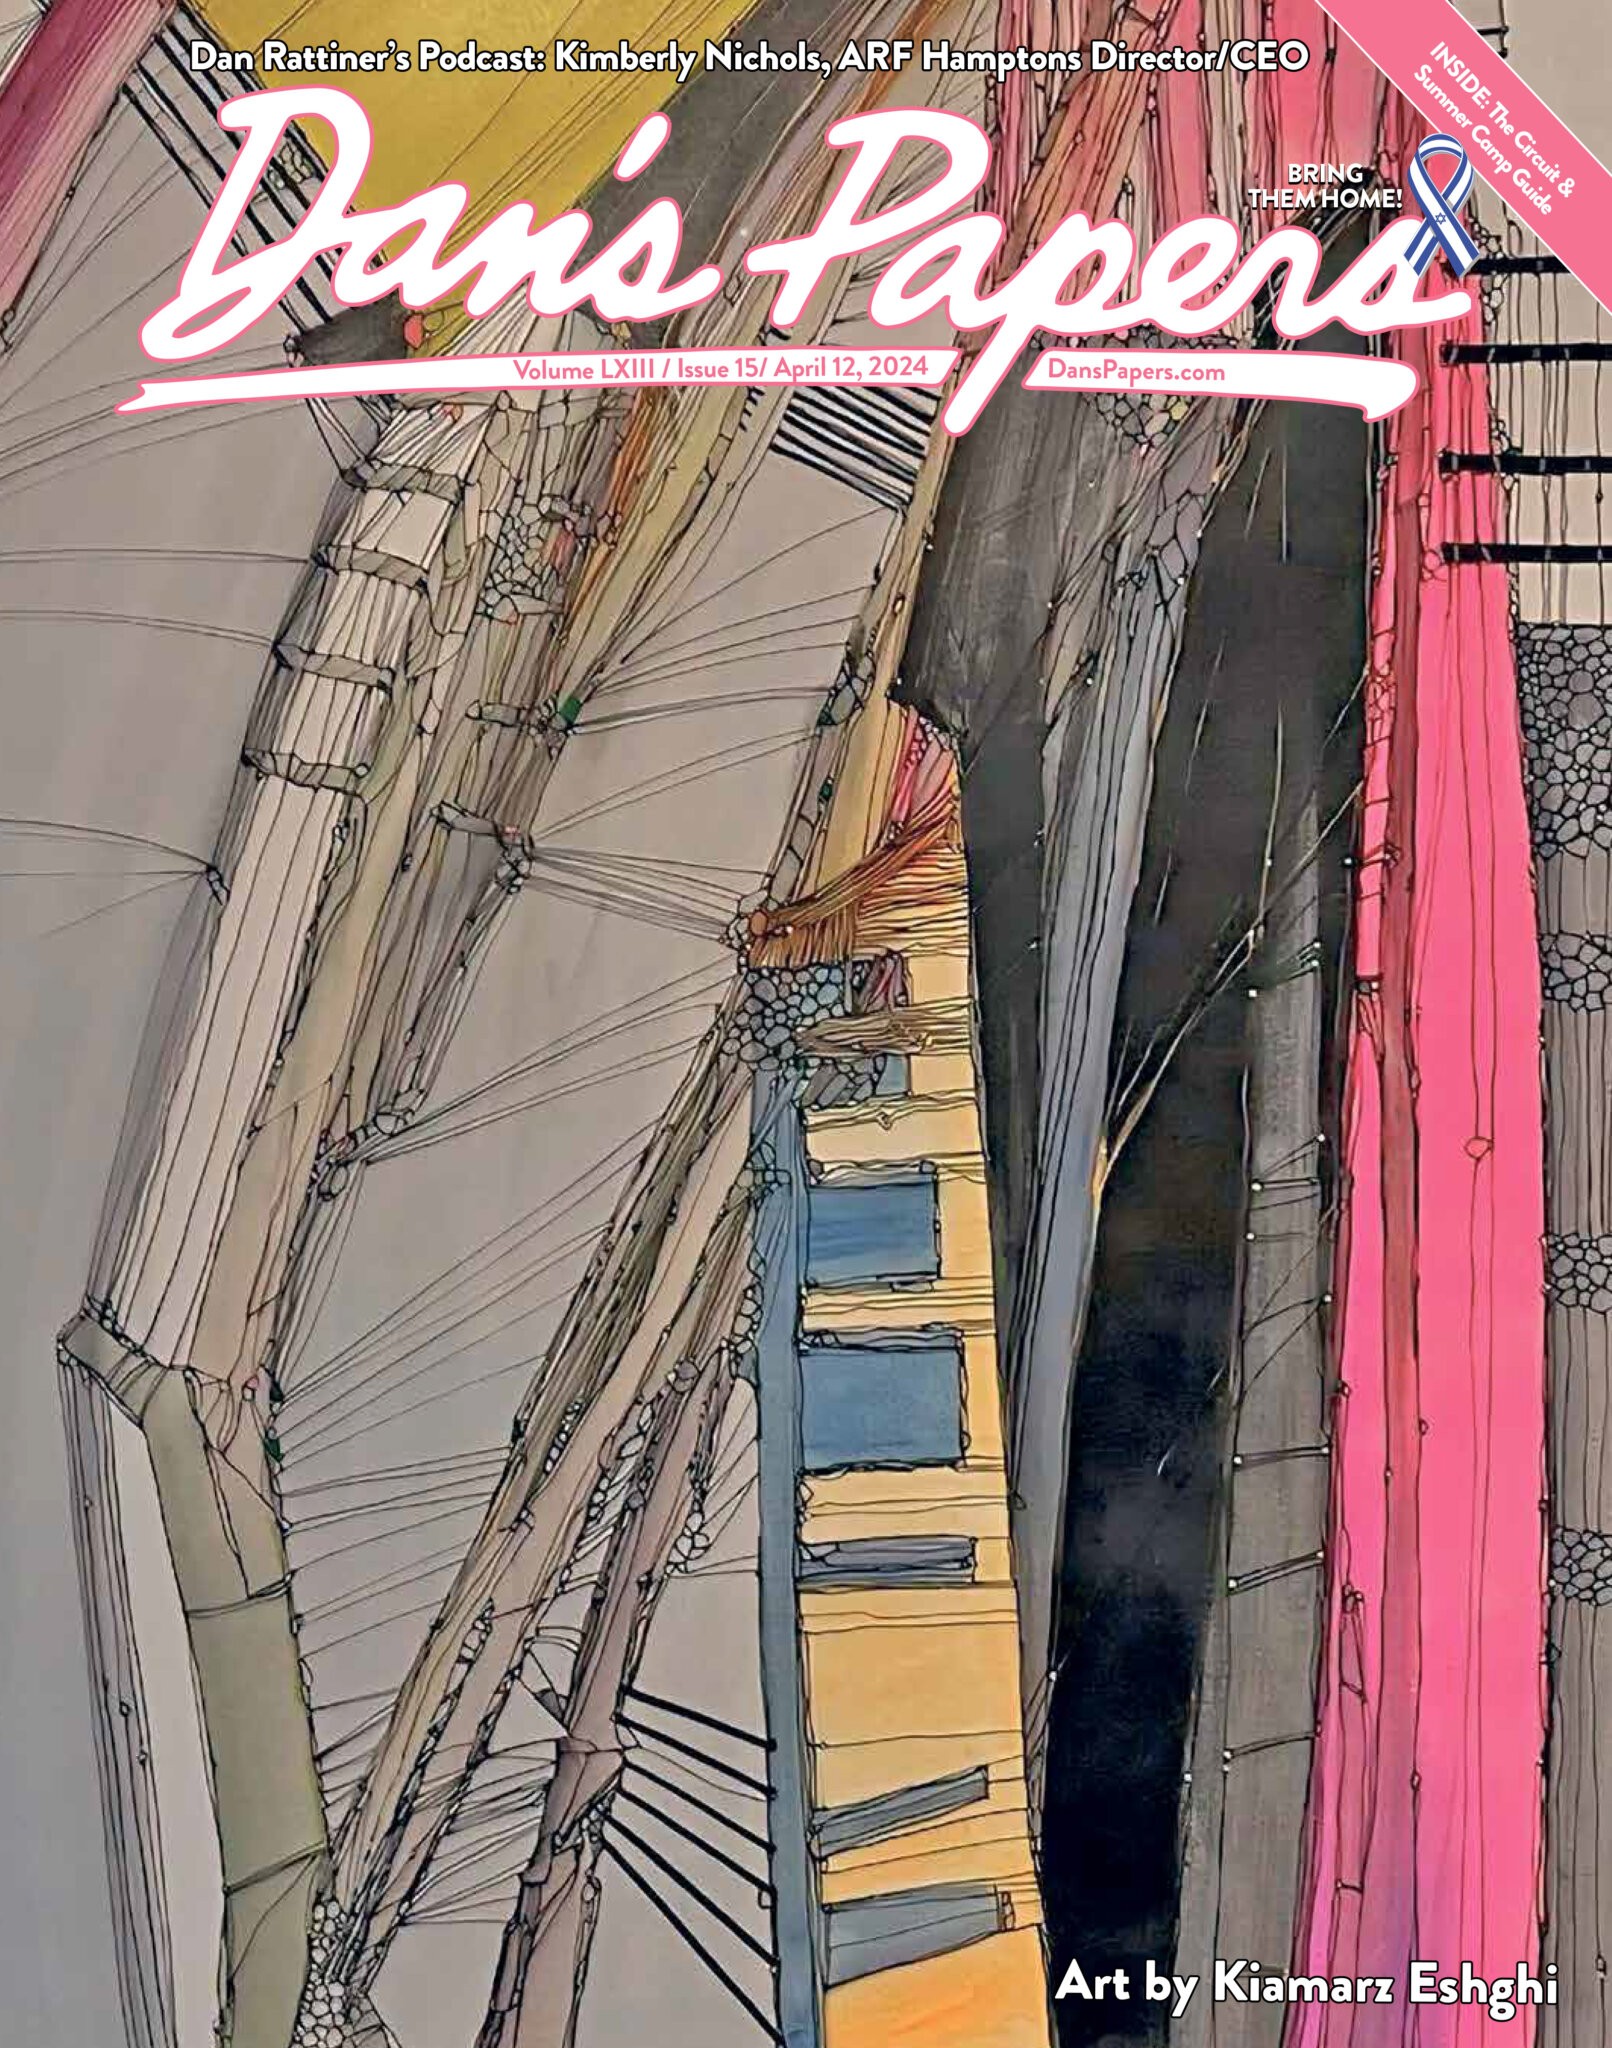 April 12, 2024 Dan's Papers cover art by Kiamarz Eshghi